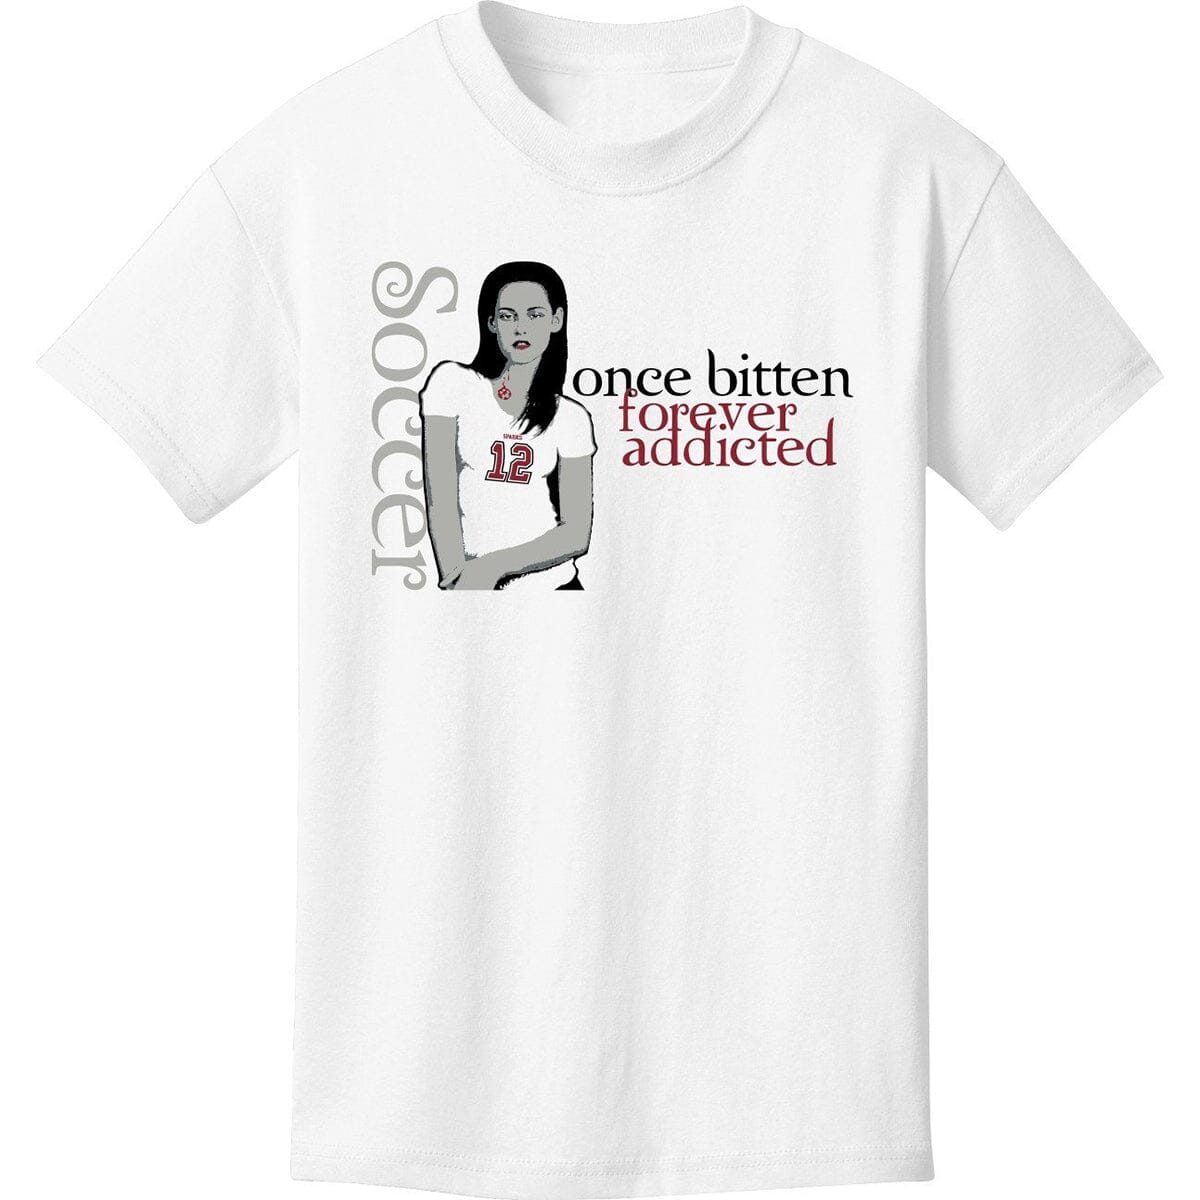 Once Bitten, Forever Addicted Short Sleeve Soccer T-Shirt Humorous Shirt 411 Adult Small White 